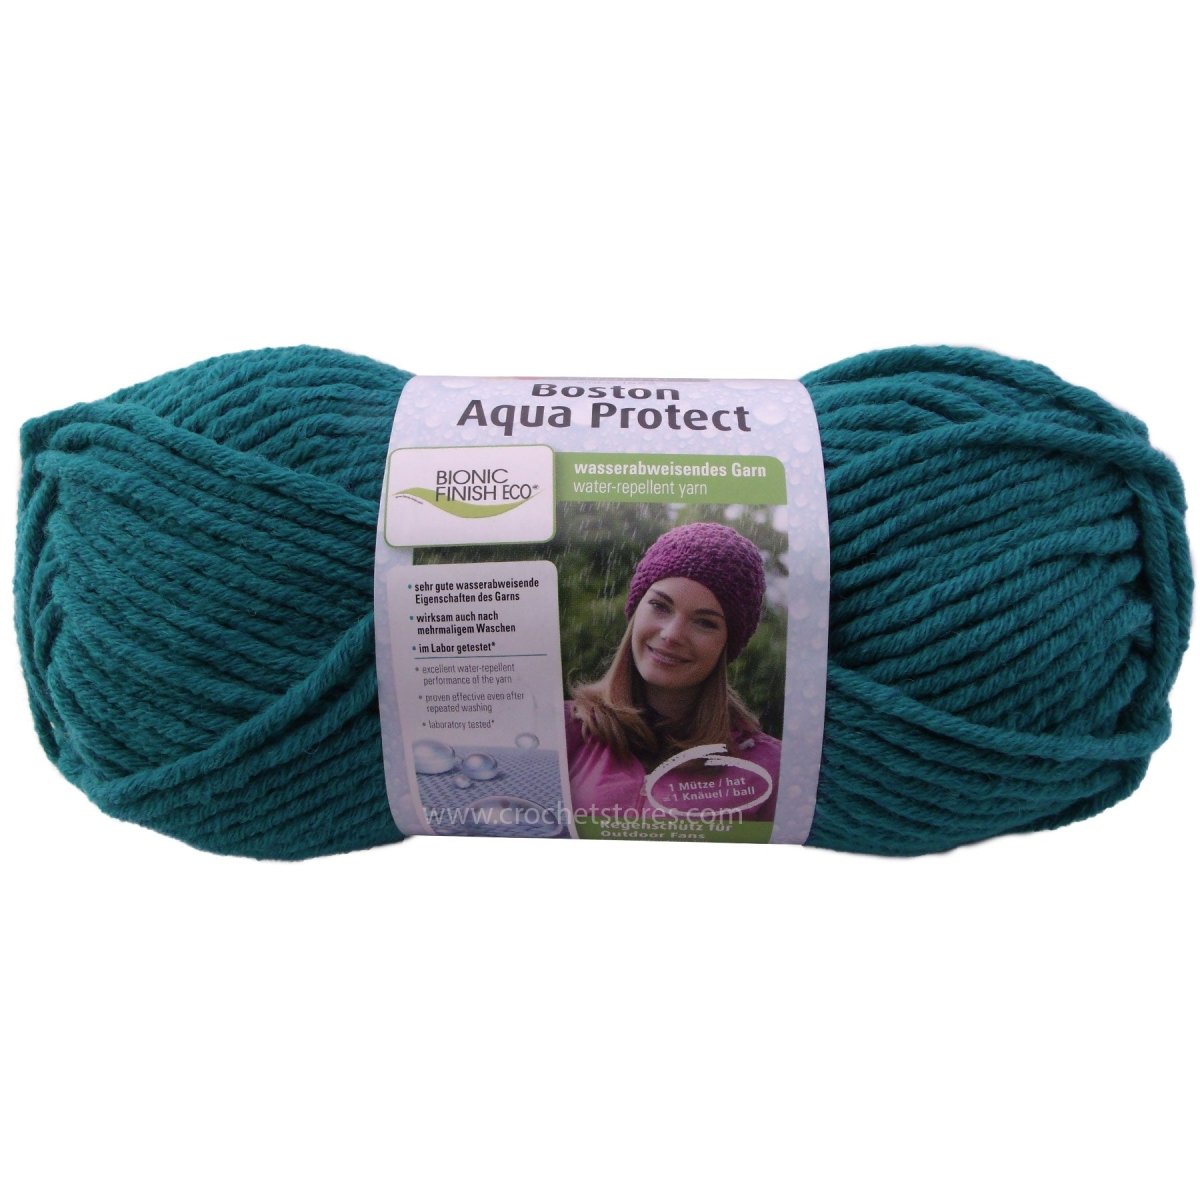 BOSTON AQUA PROTECT - Crochetstores9807791-572